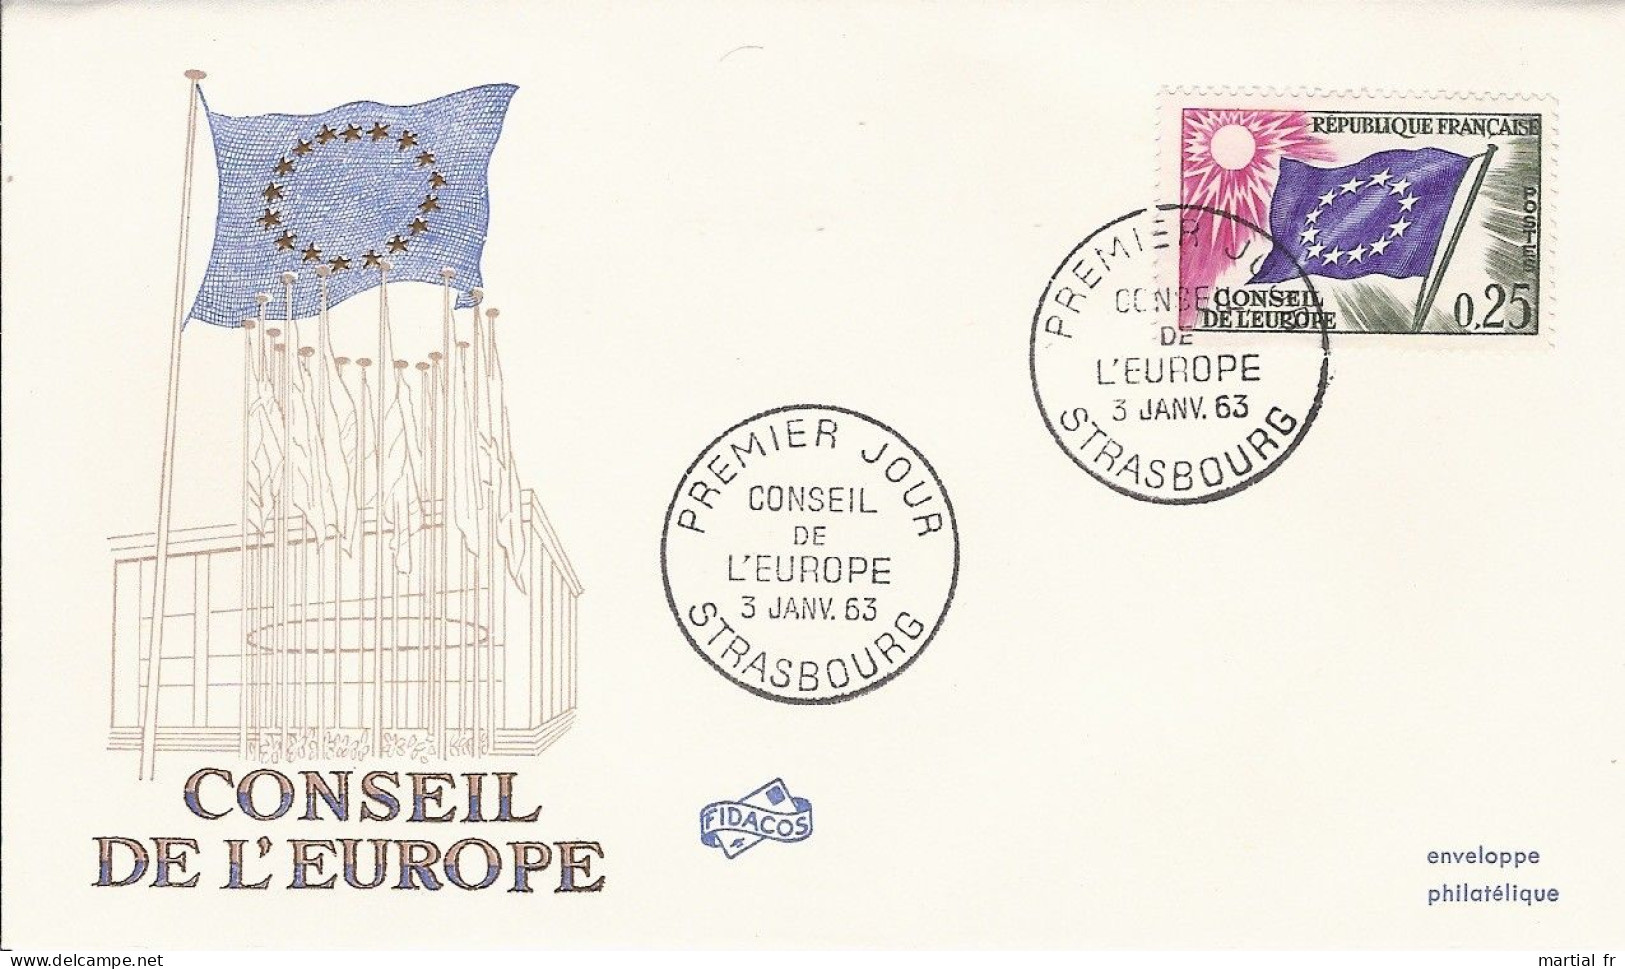 FRANCE CONSEIL EUROPE COUNCIL OF EUROPE 1963 0.25 SOLEIL SONNE SUN DRAPEAU FAHNE FLAG STRASBOURG - Lettres & Documents